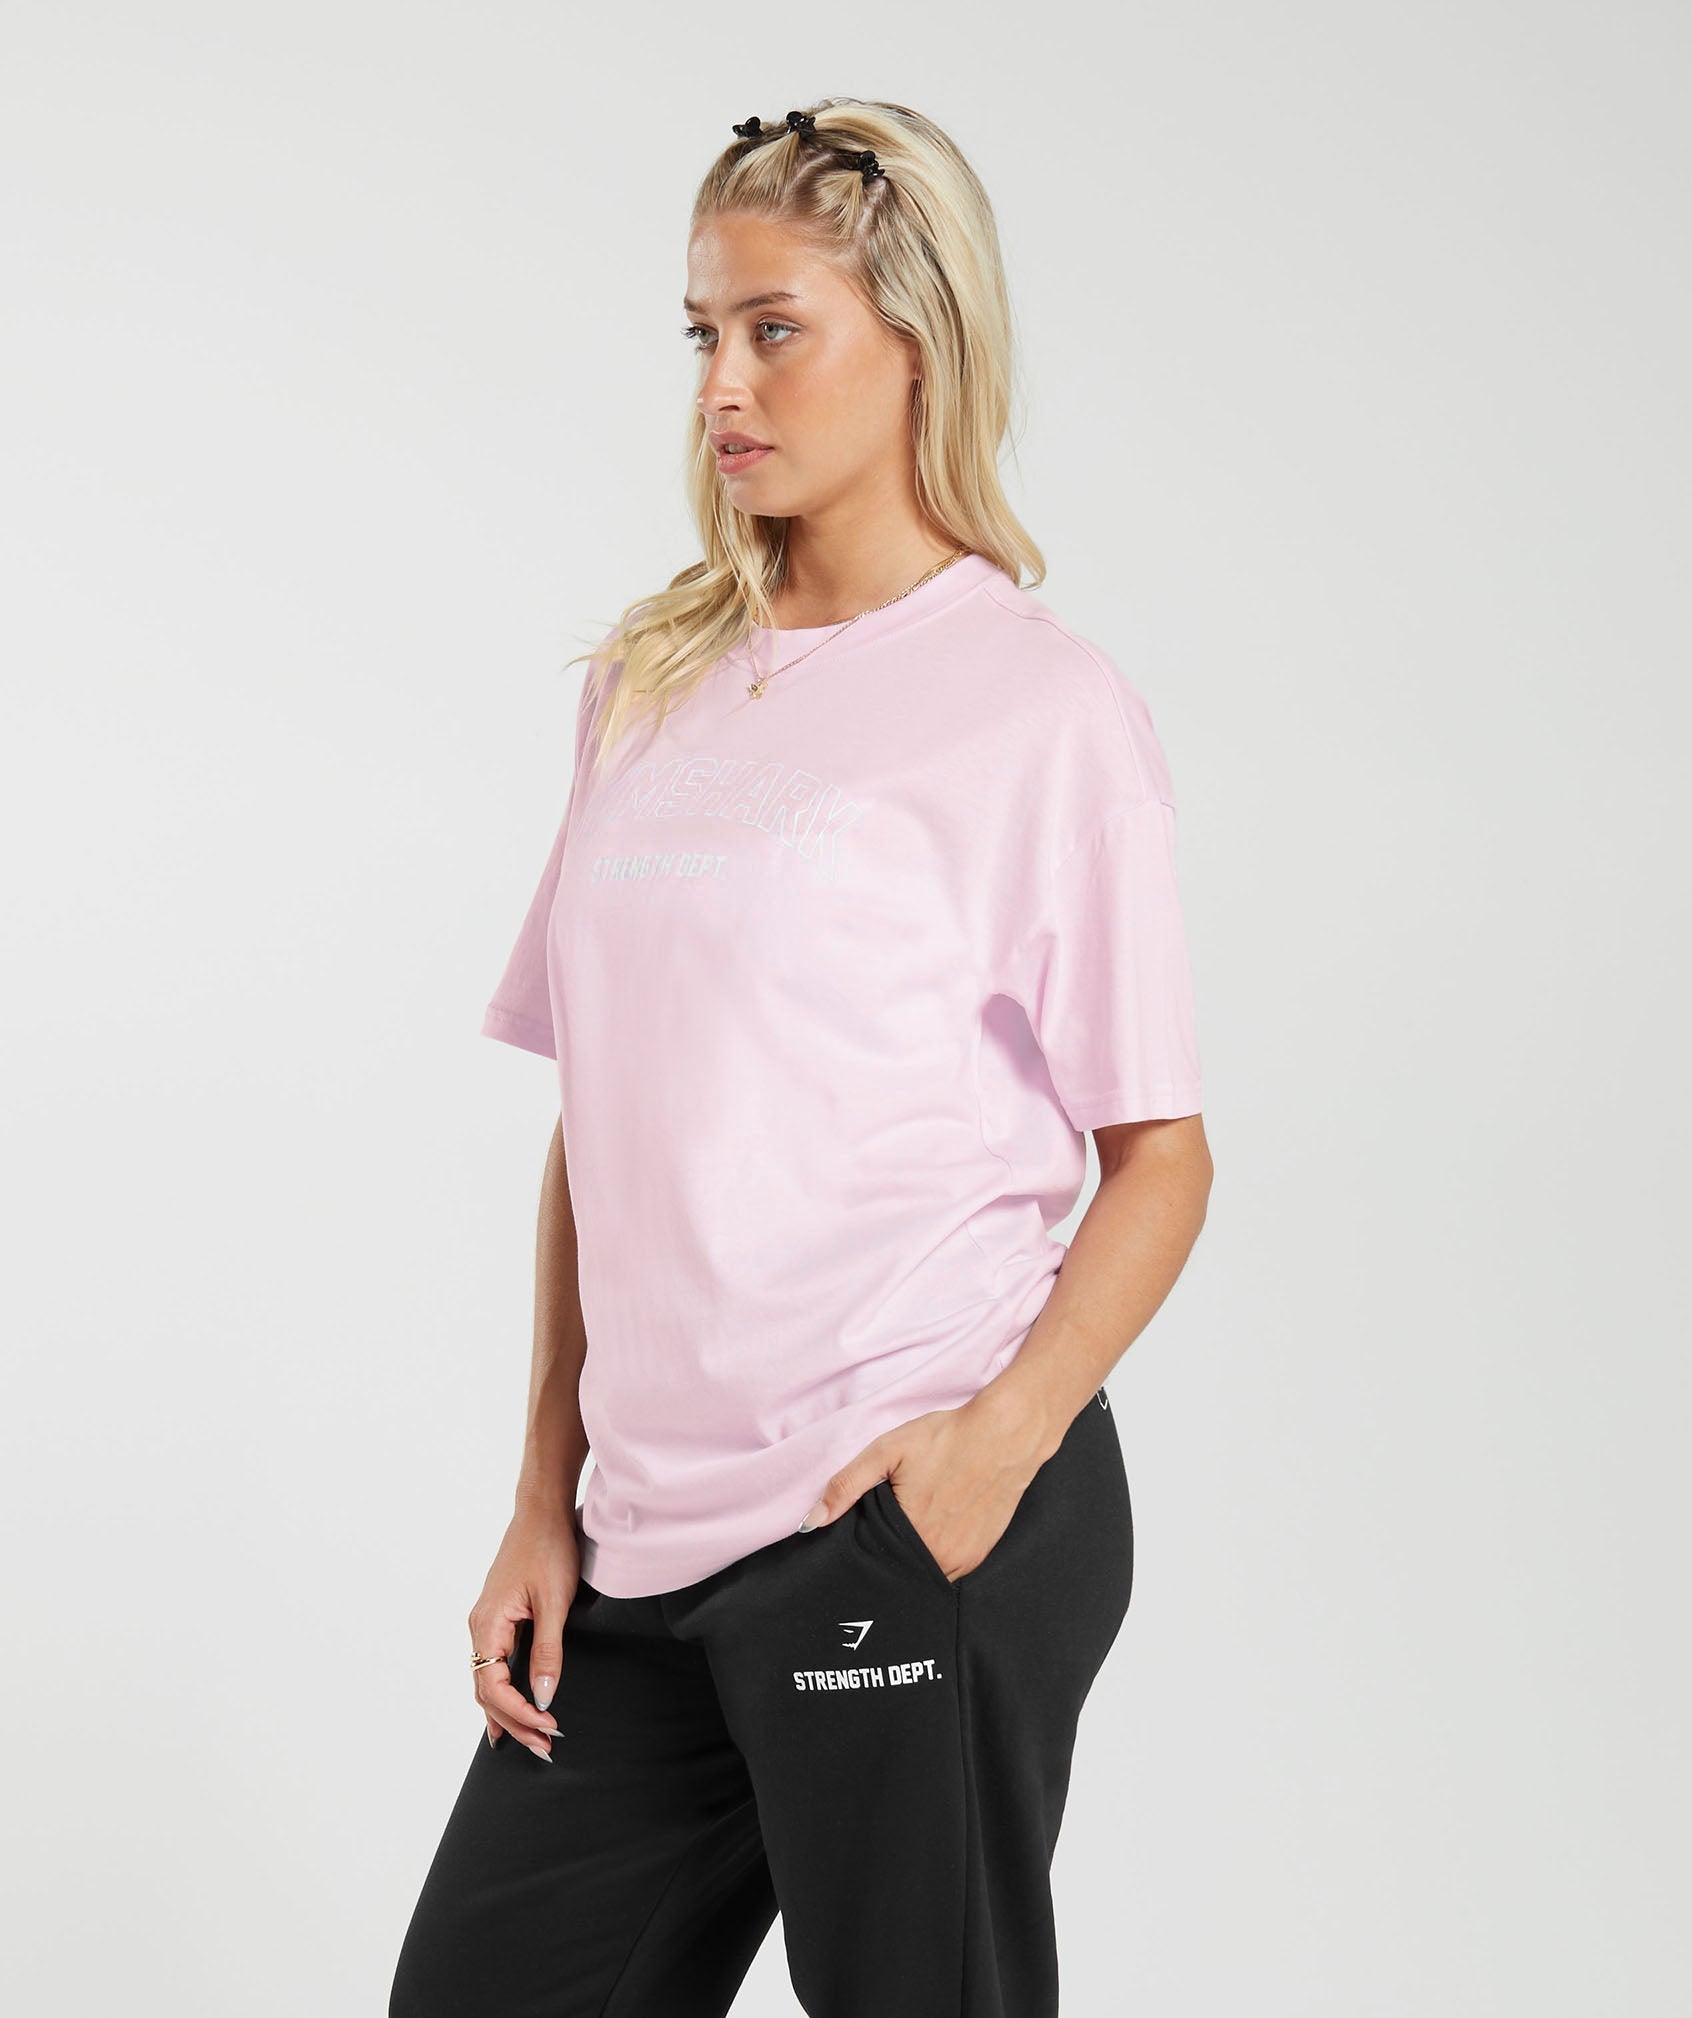 Strength Department  Oversized T-Shirt in Lemonade Pink - view 3